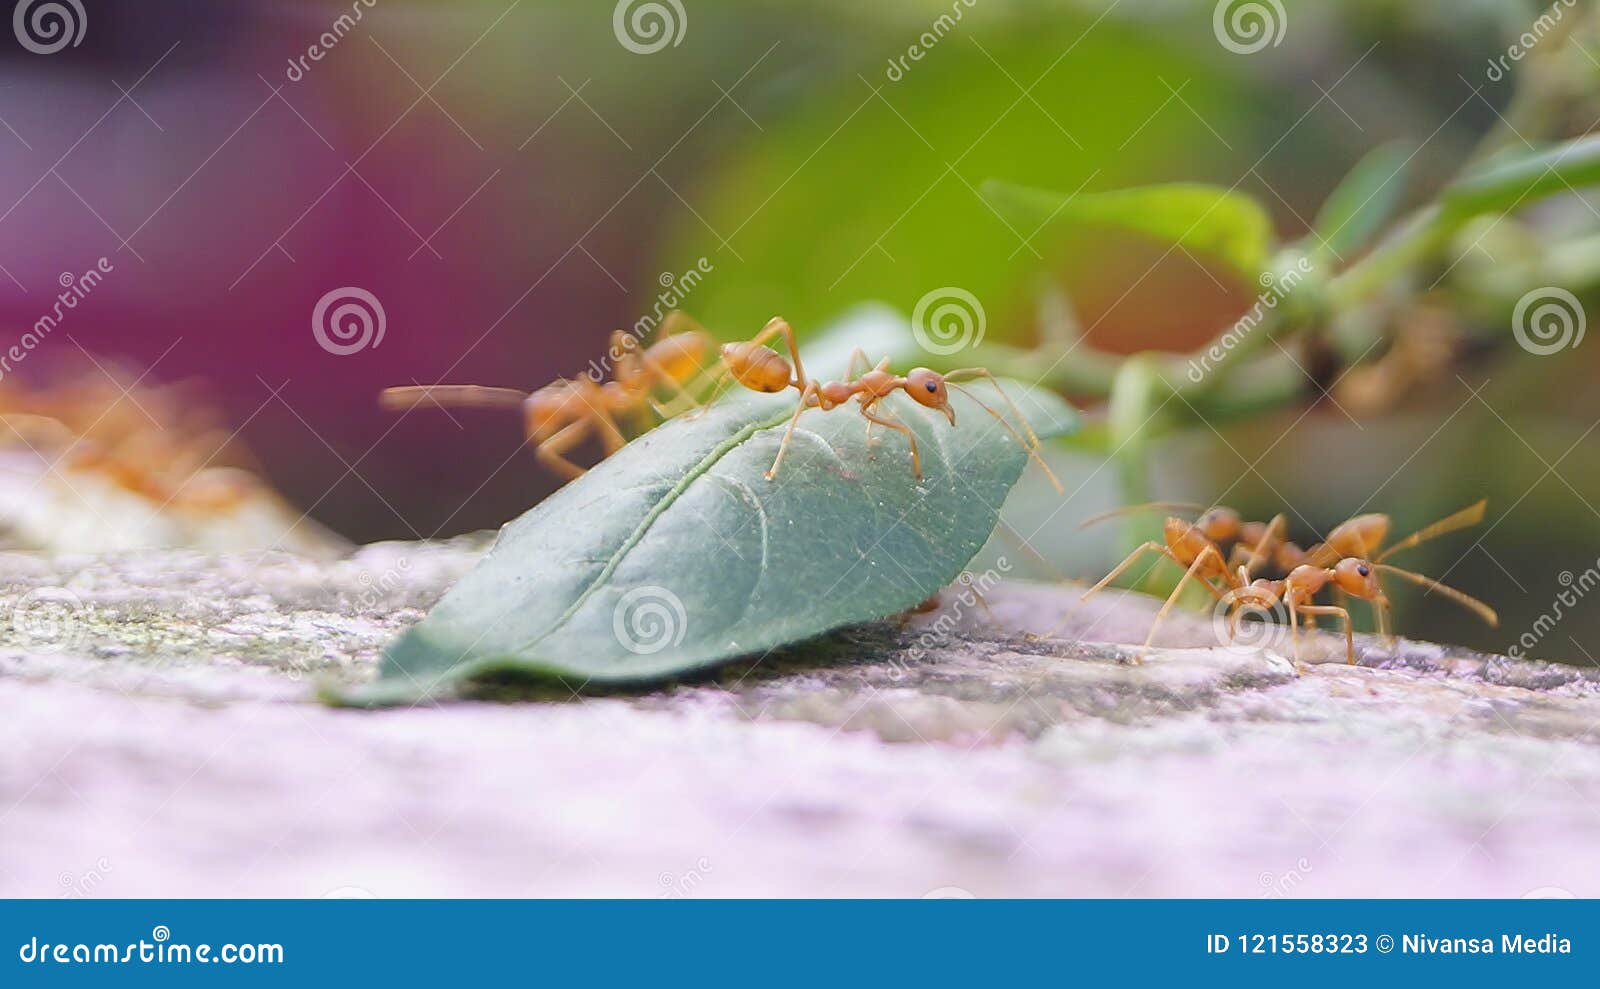 ants pharaoh ant _ urumbu